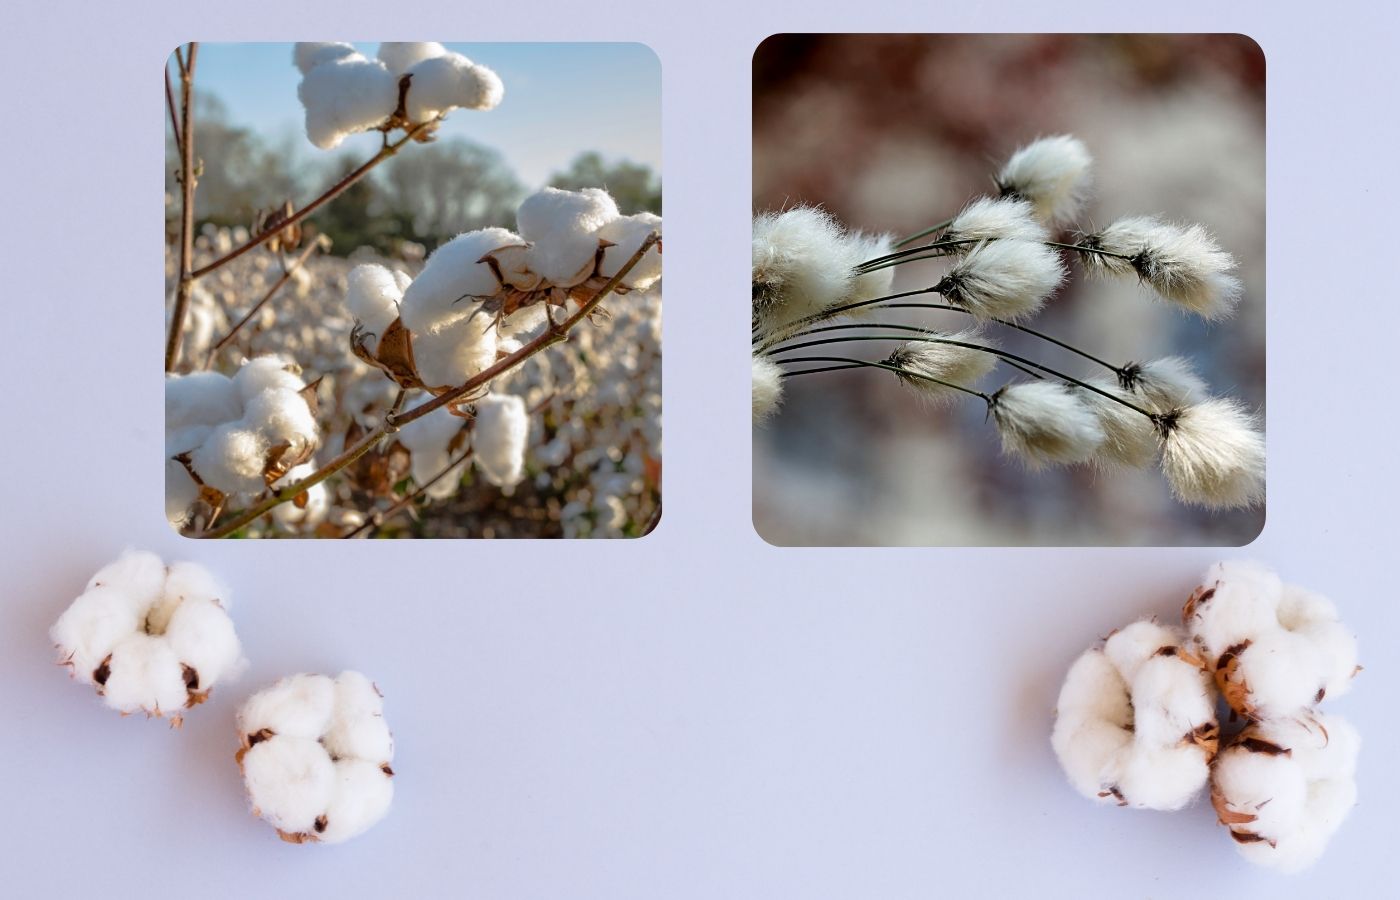 organic CottonWool 3 is a organic cotton blend